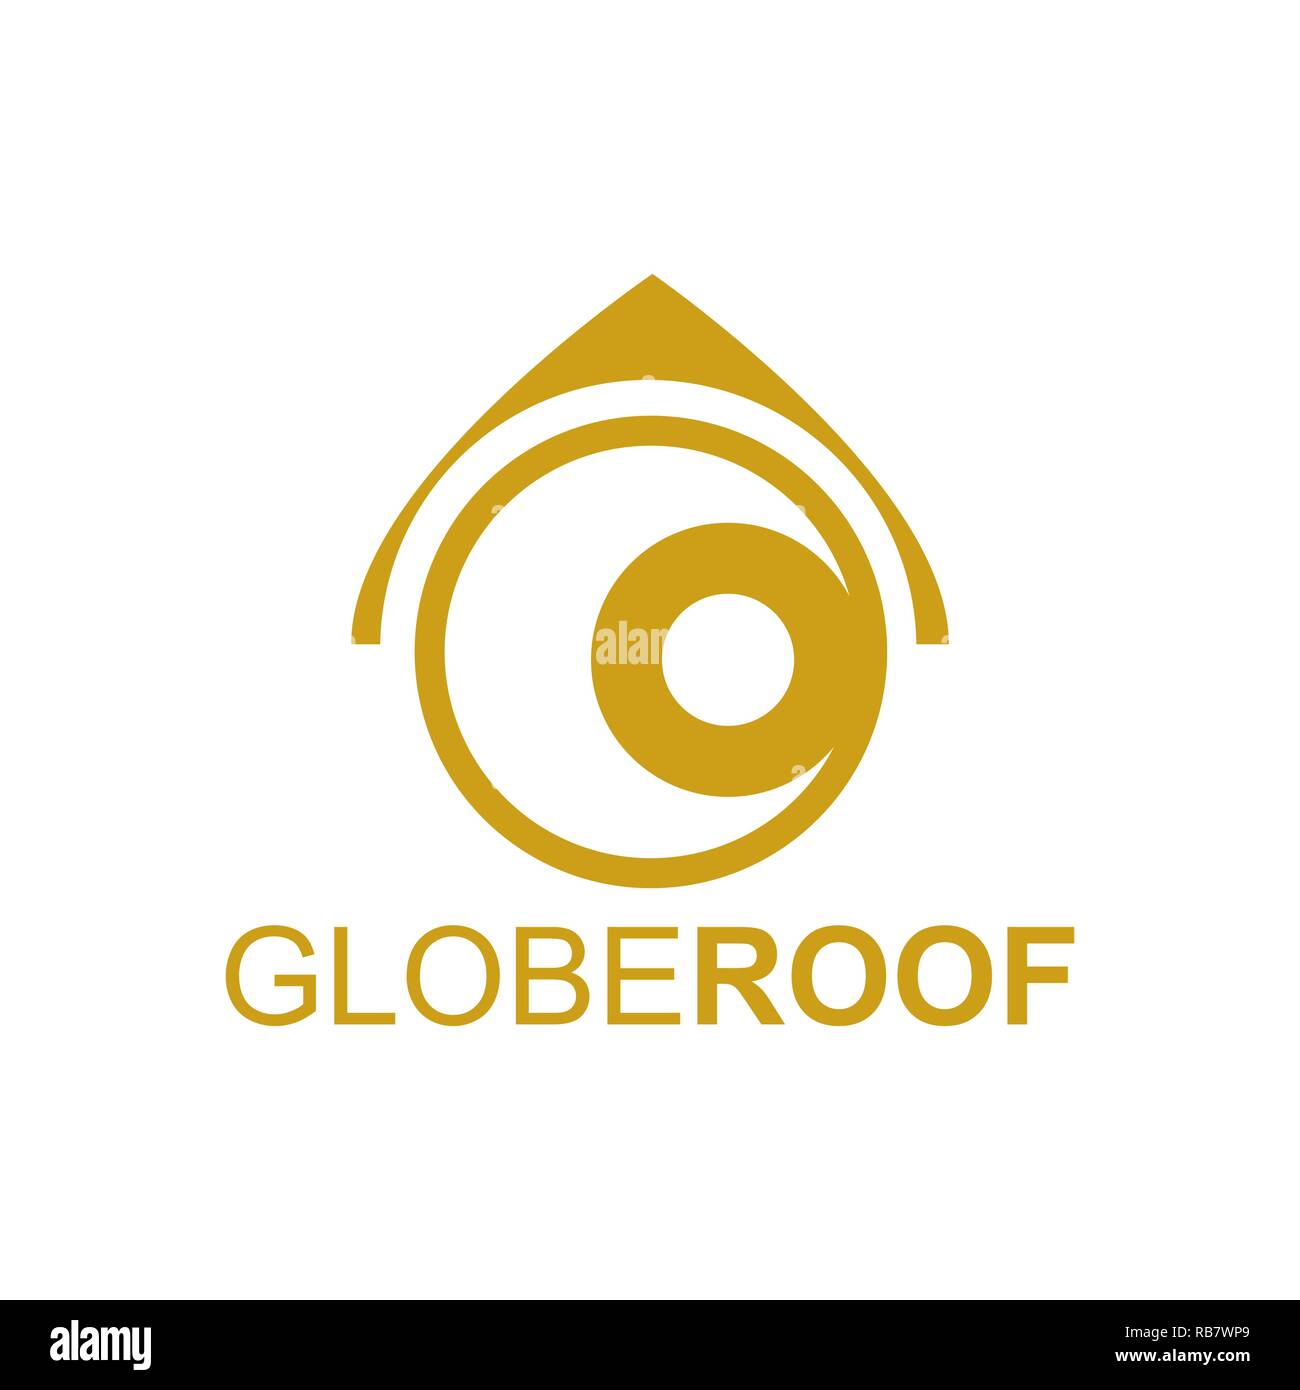 Globus Dach logo Konzept Design vorlage Idee in gold-braune Farbe Stock Vektor